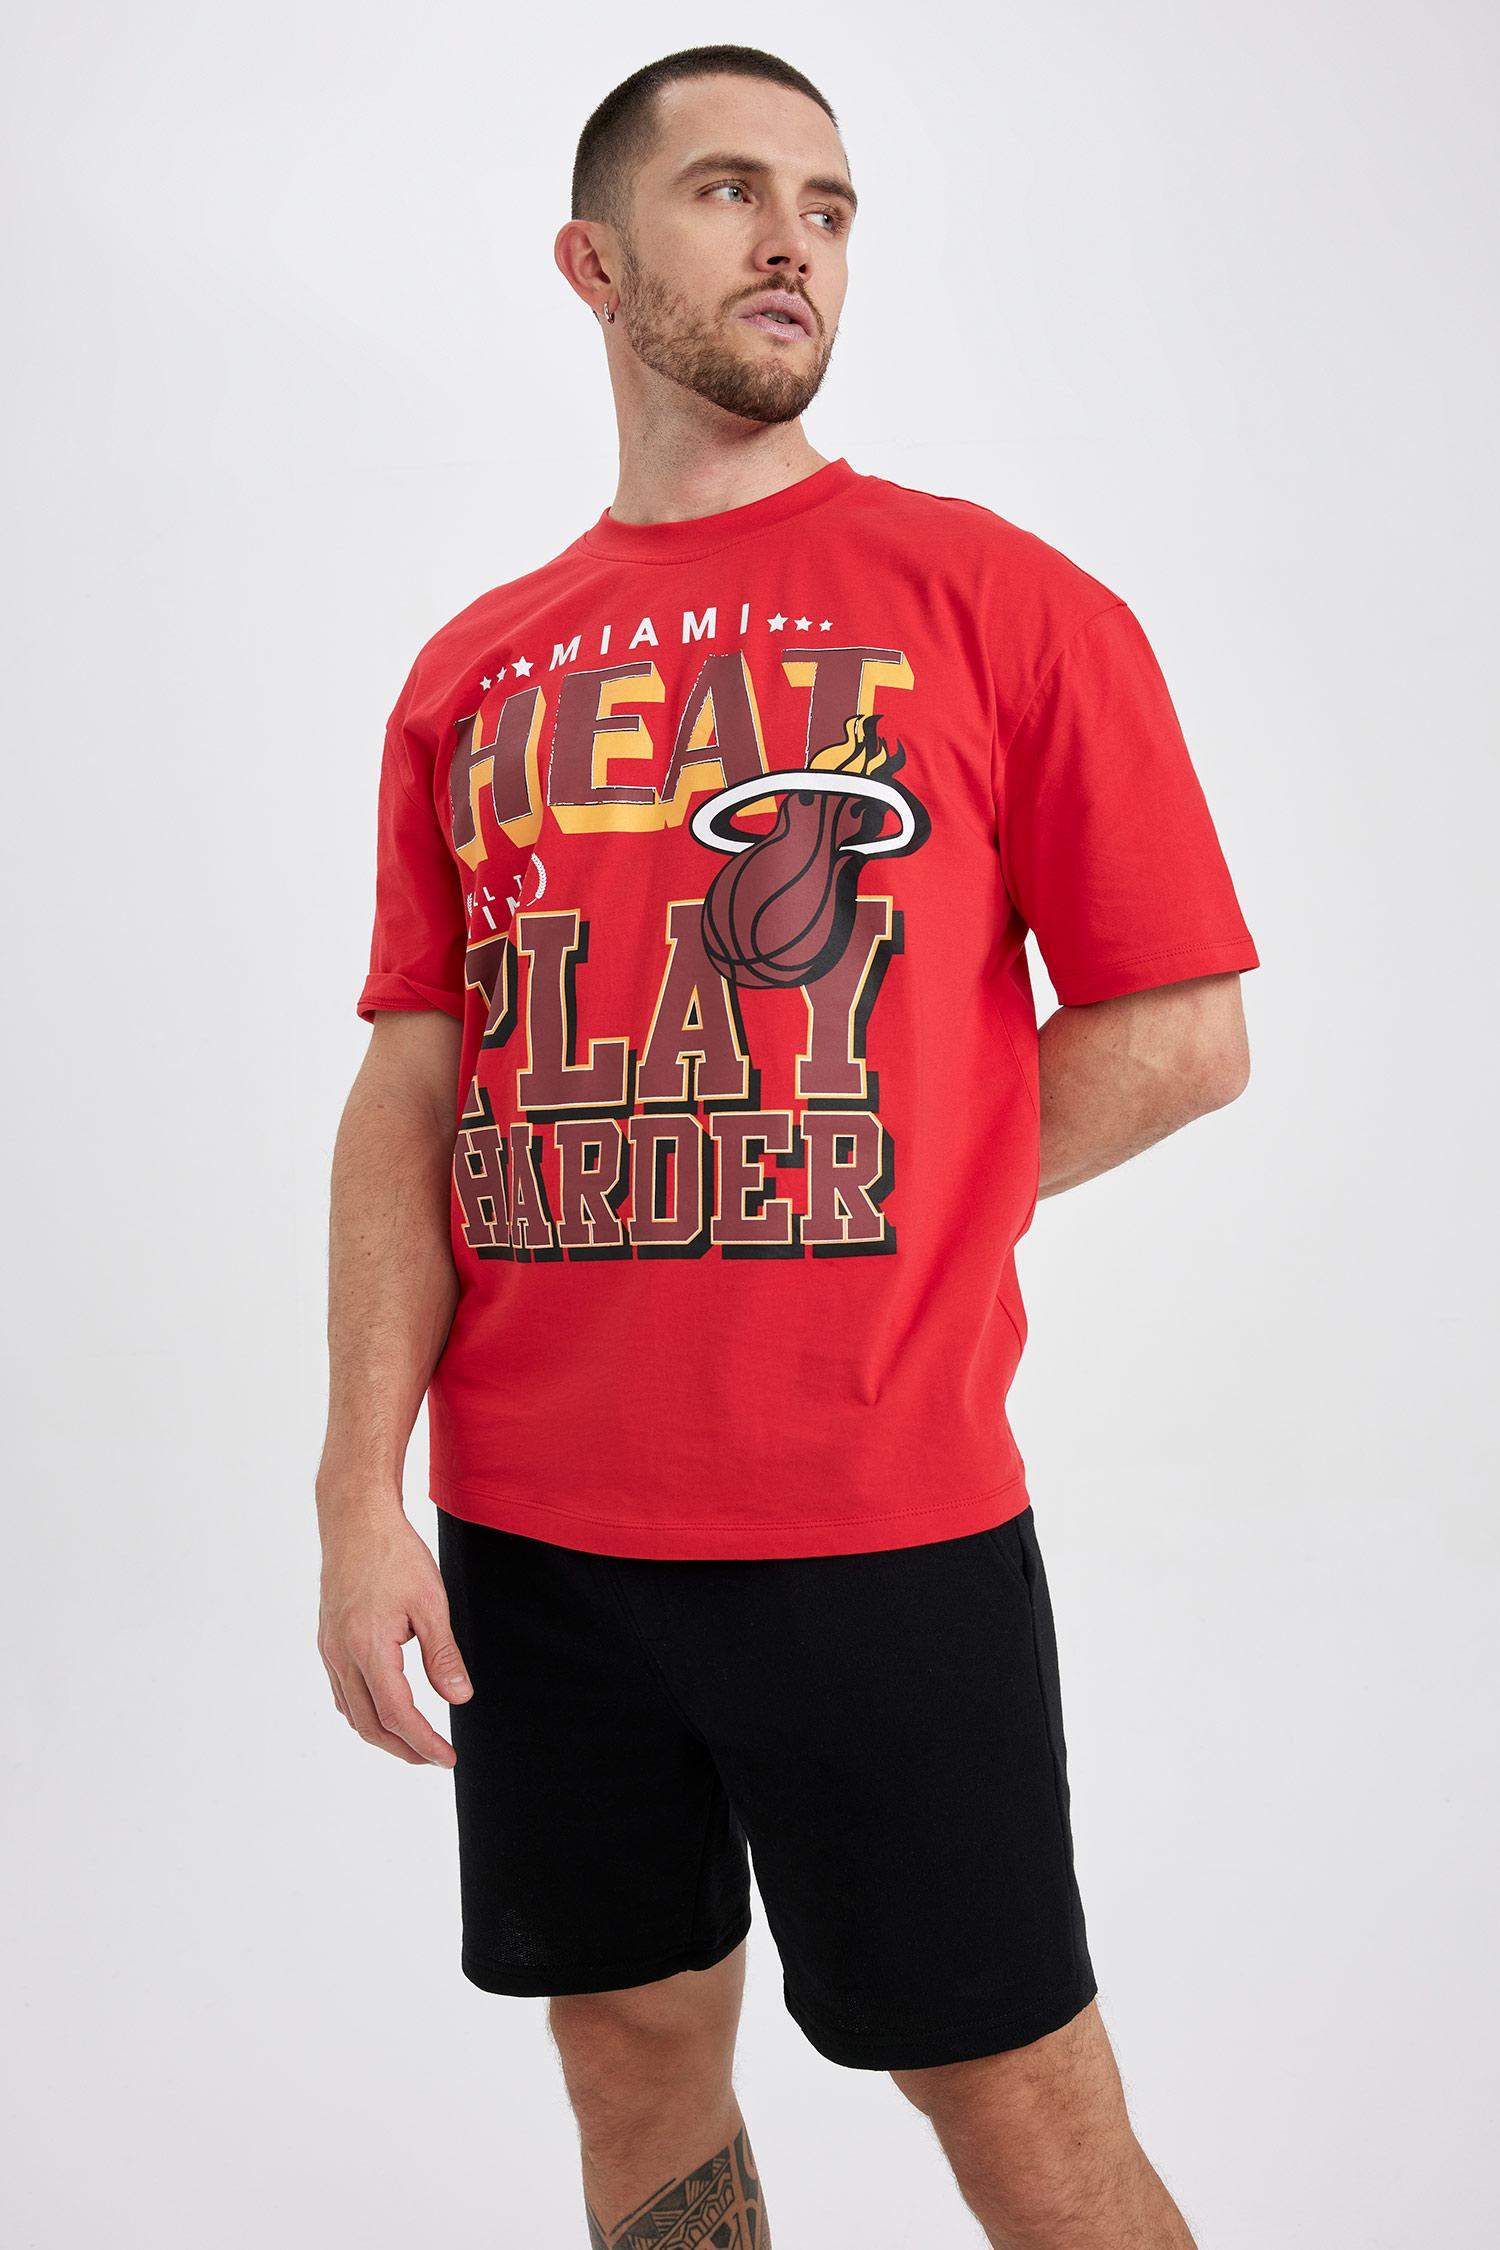 Black MAN Defacto Fit NBA Miami Heat Licensed Oversize Fit Crew